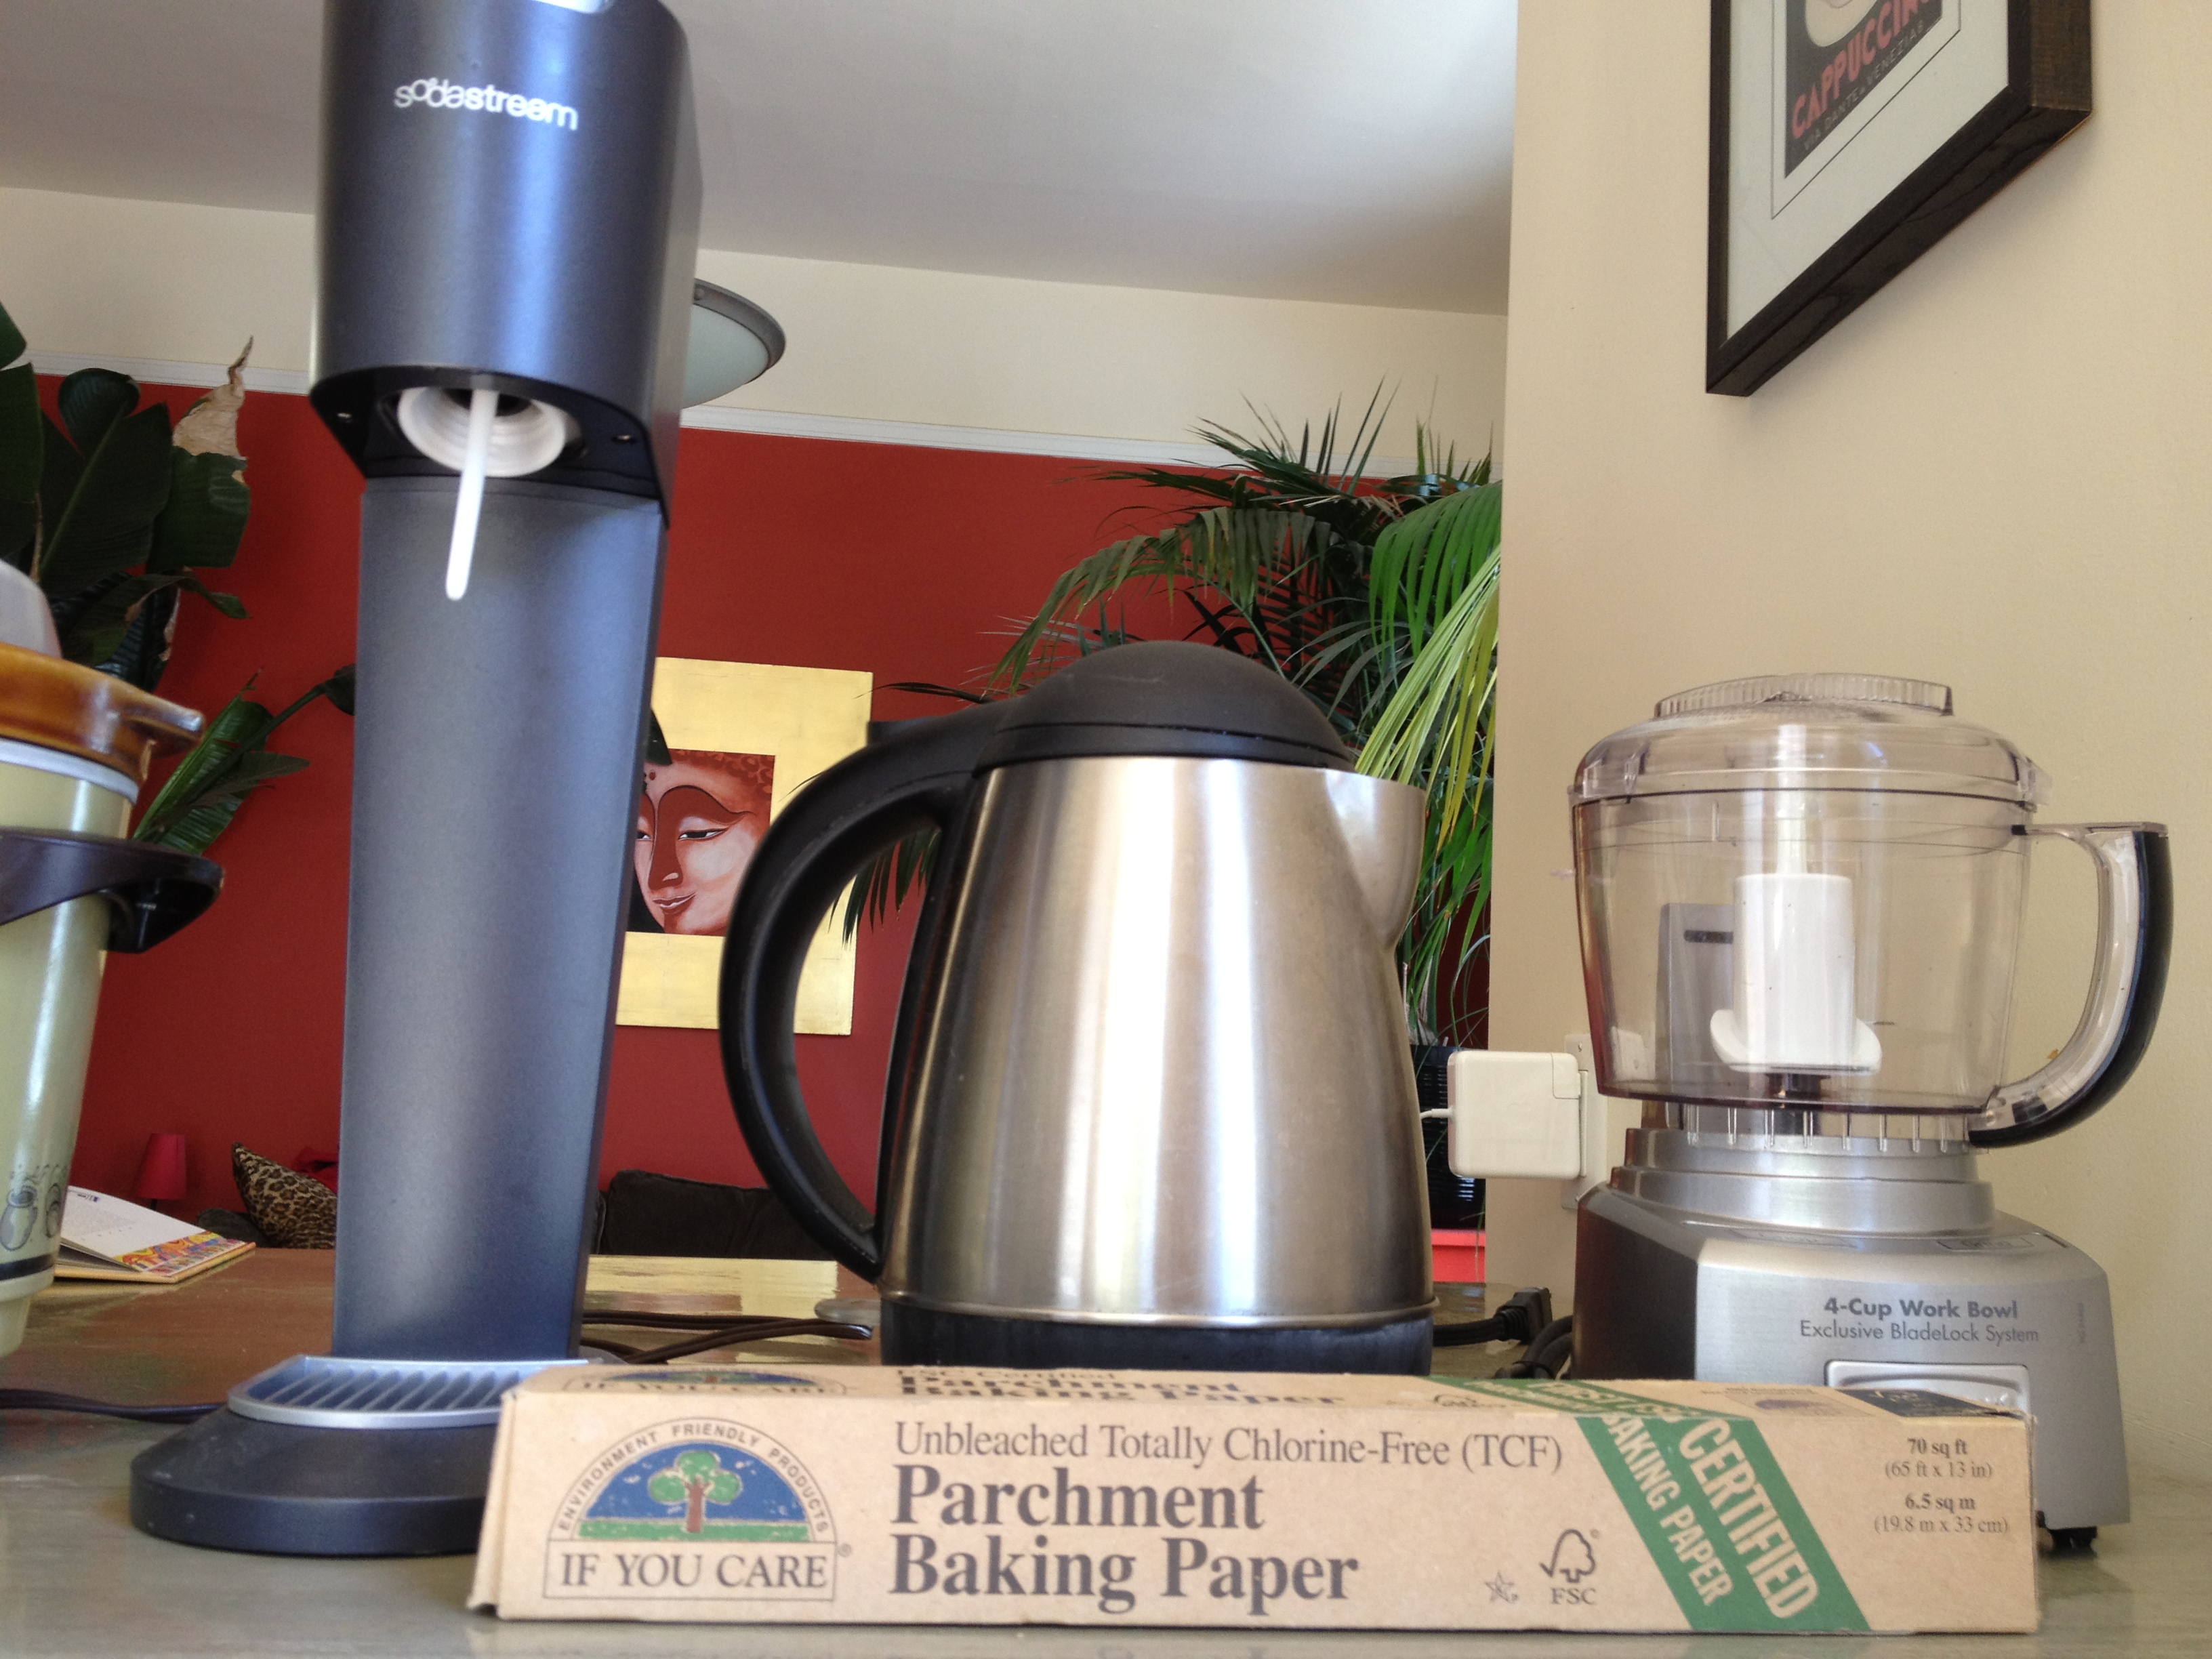 Soda stream, electric kettle, food processor, parchment paper